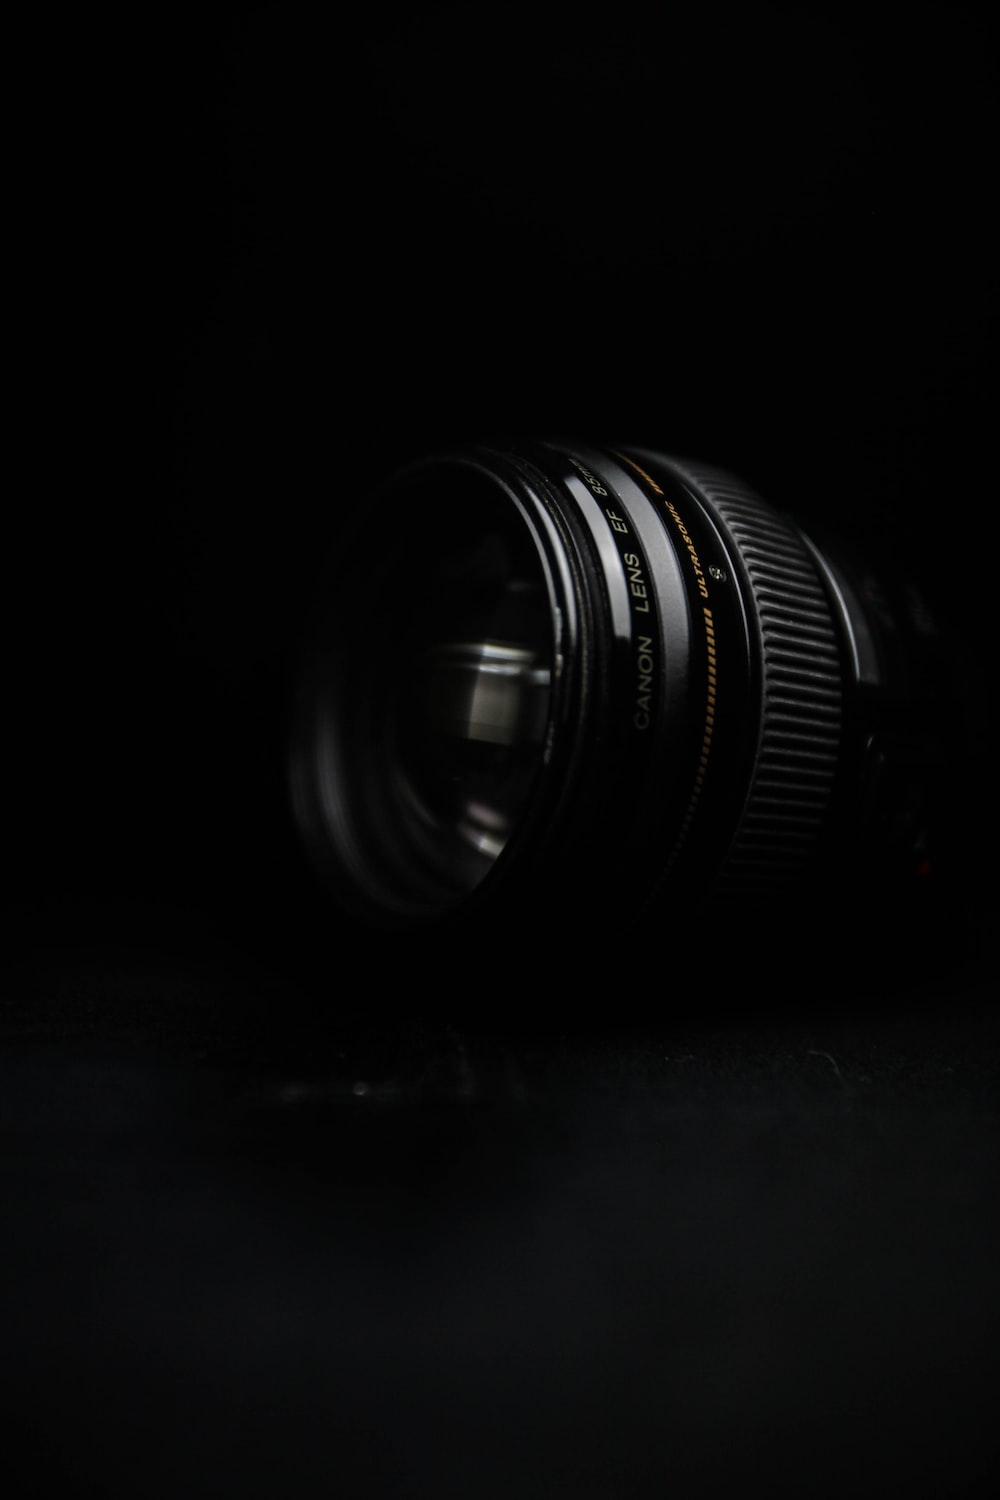 black camera lens on black surface photo